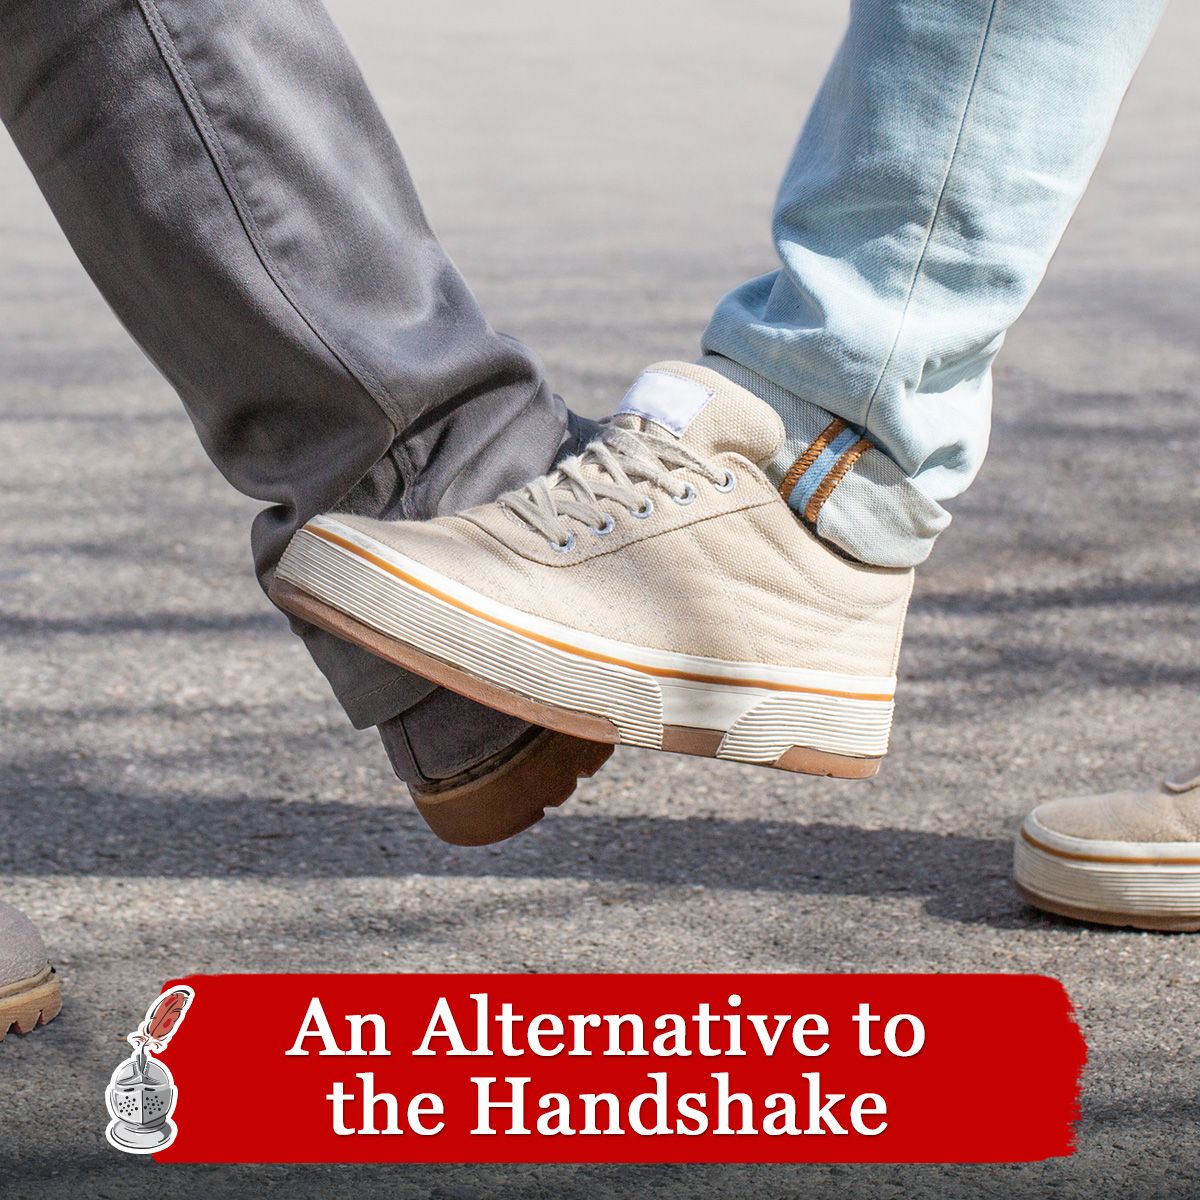 An Alternative to the Handshake